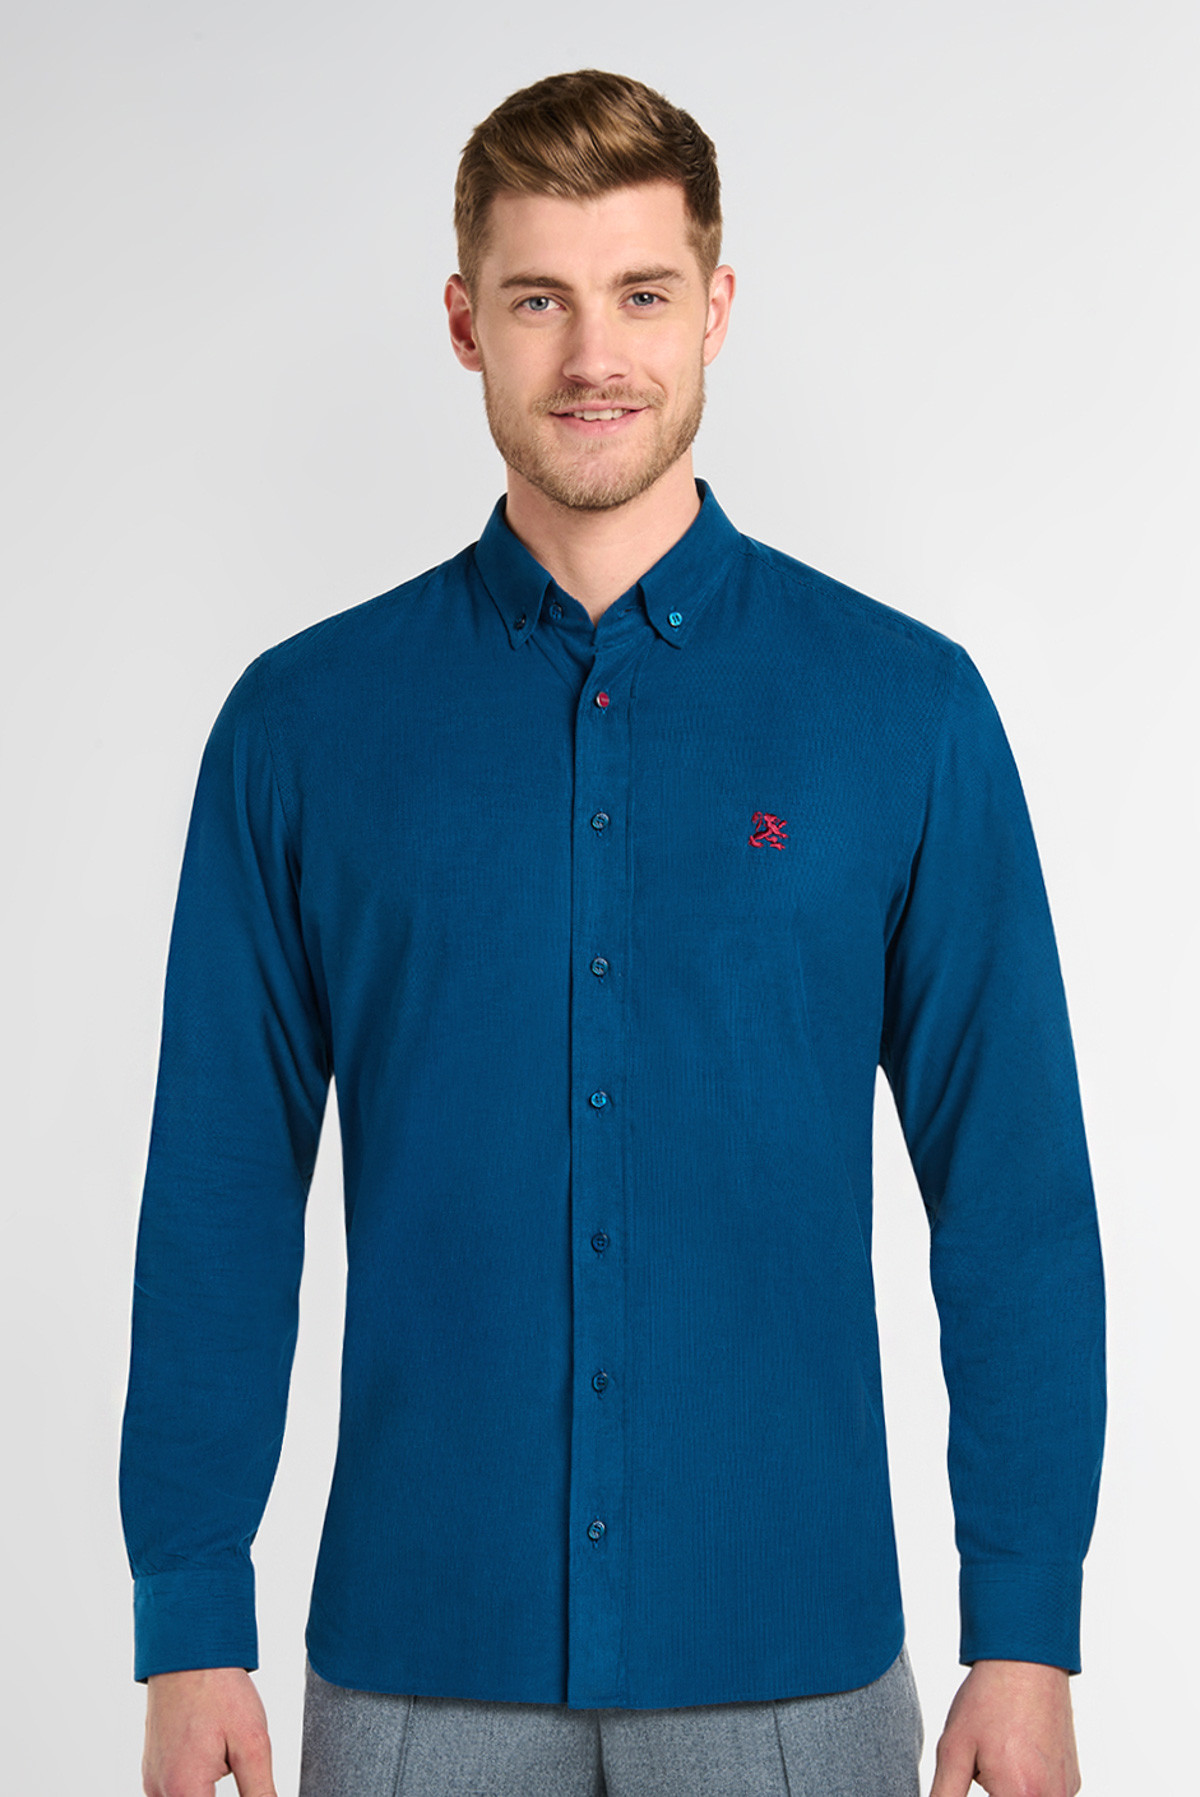 Cobalt blue corduroy shirt, 